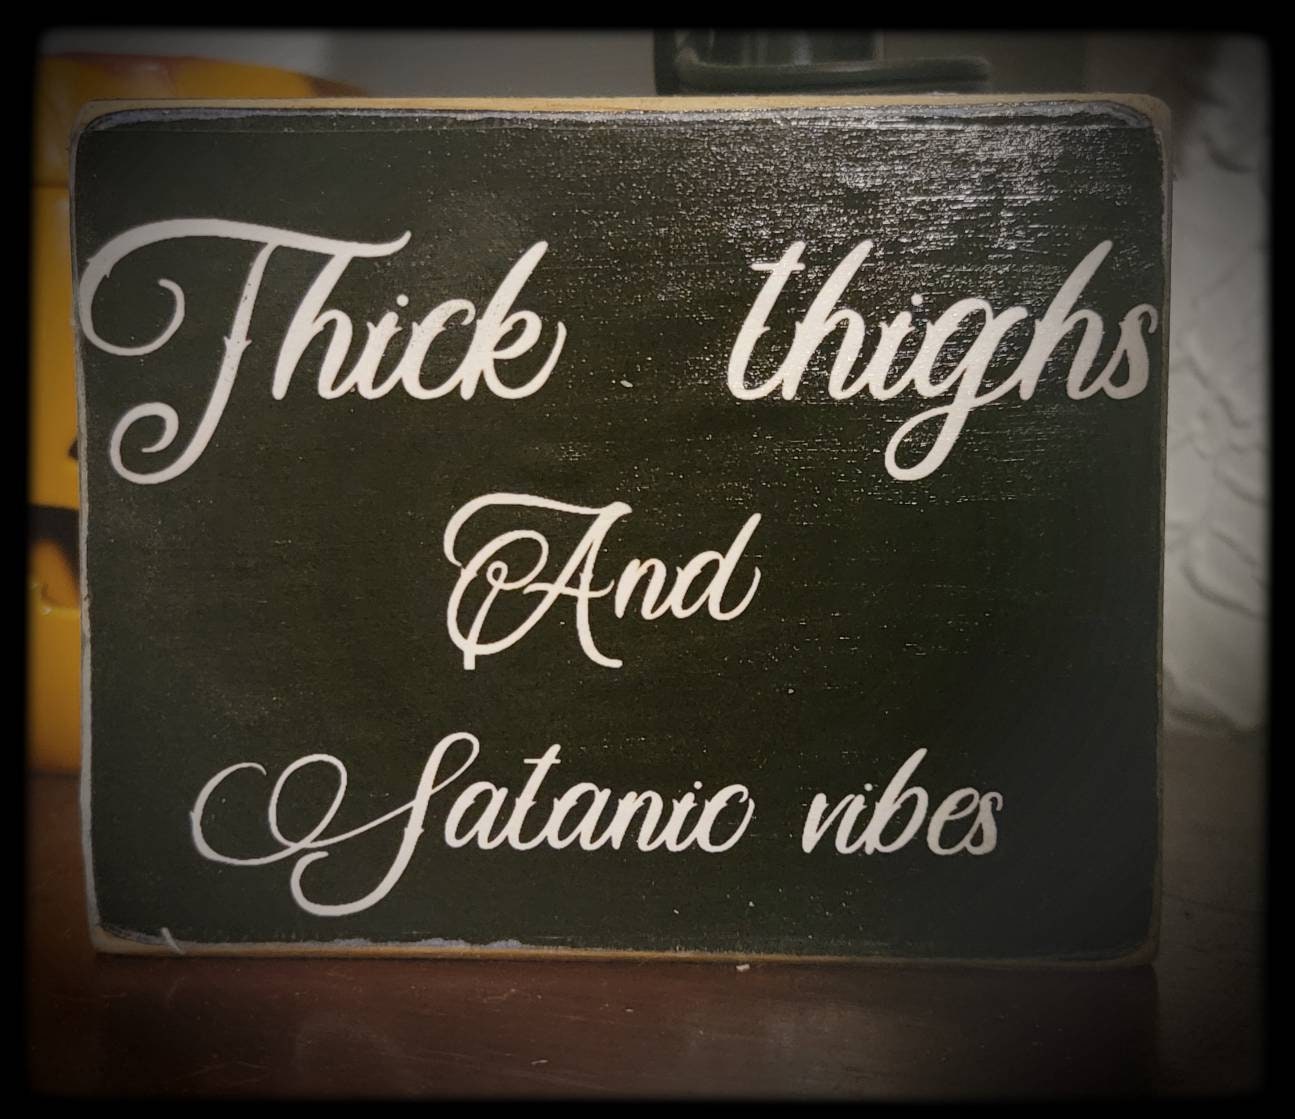 Thick thighs satanic vibes box sign